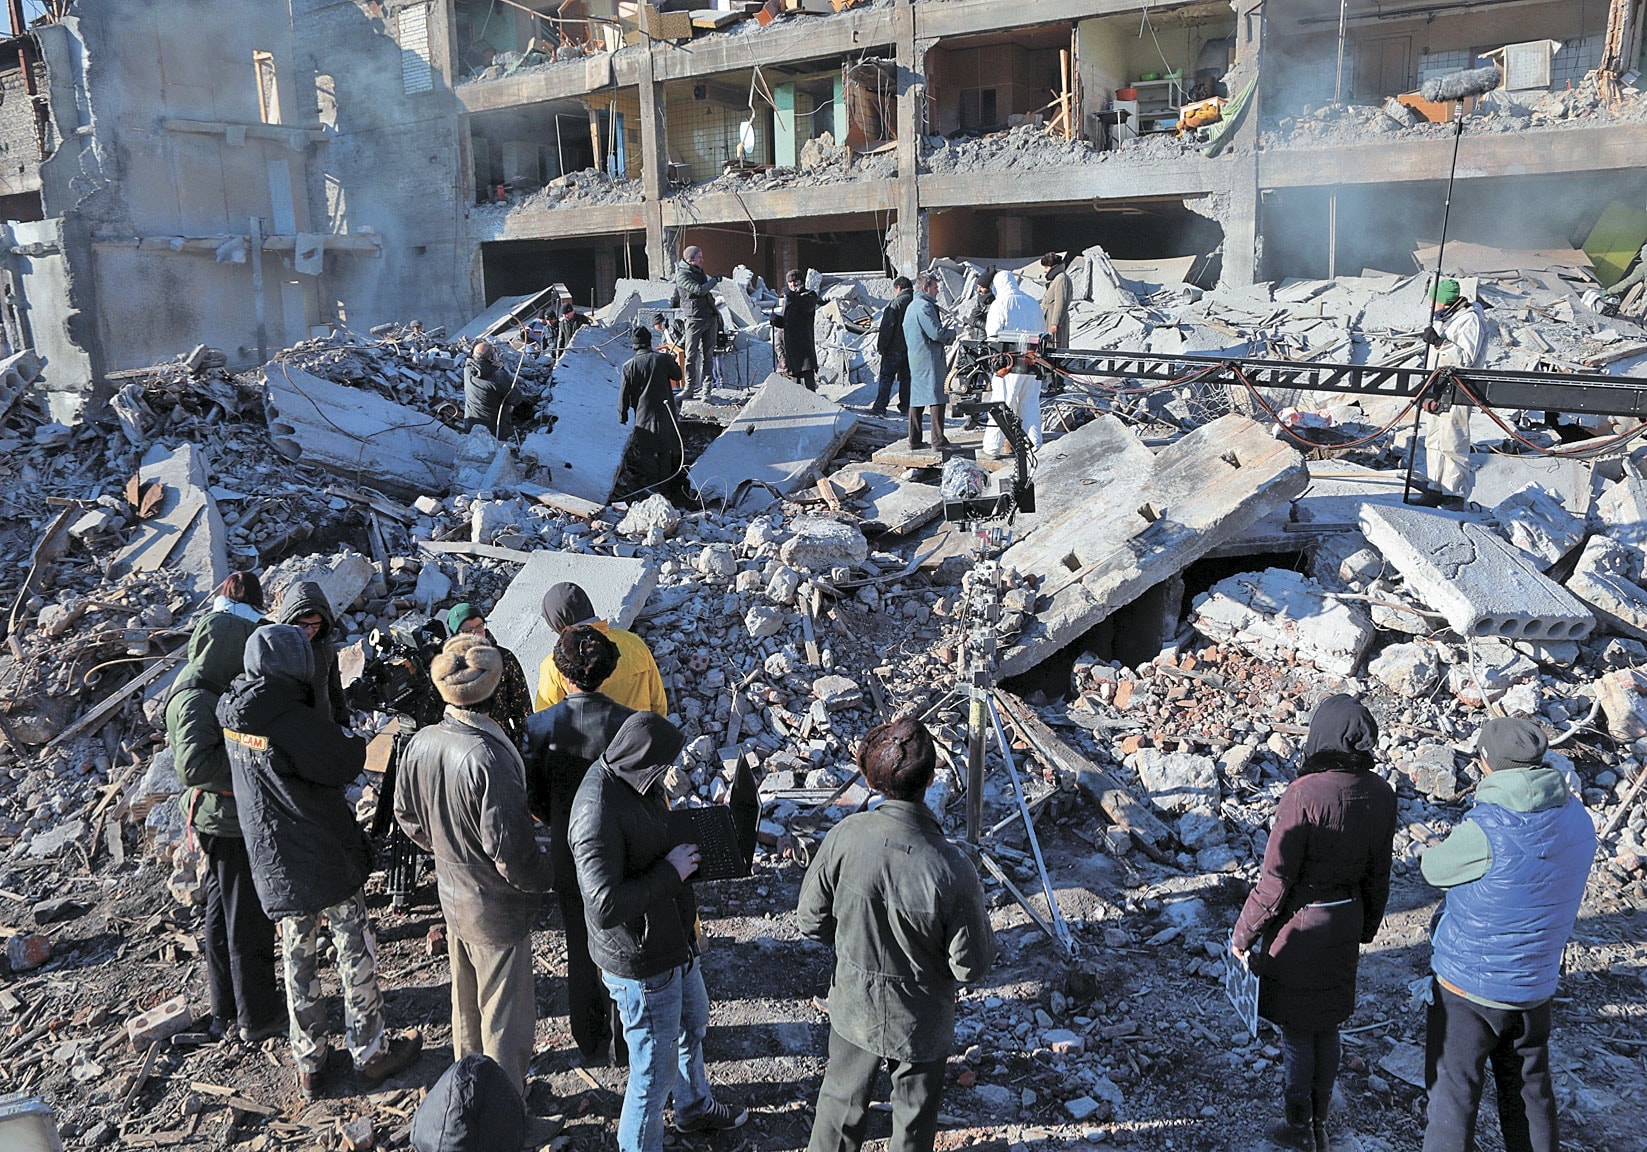 землетрясение в грузии 1988